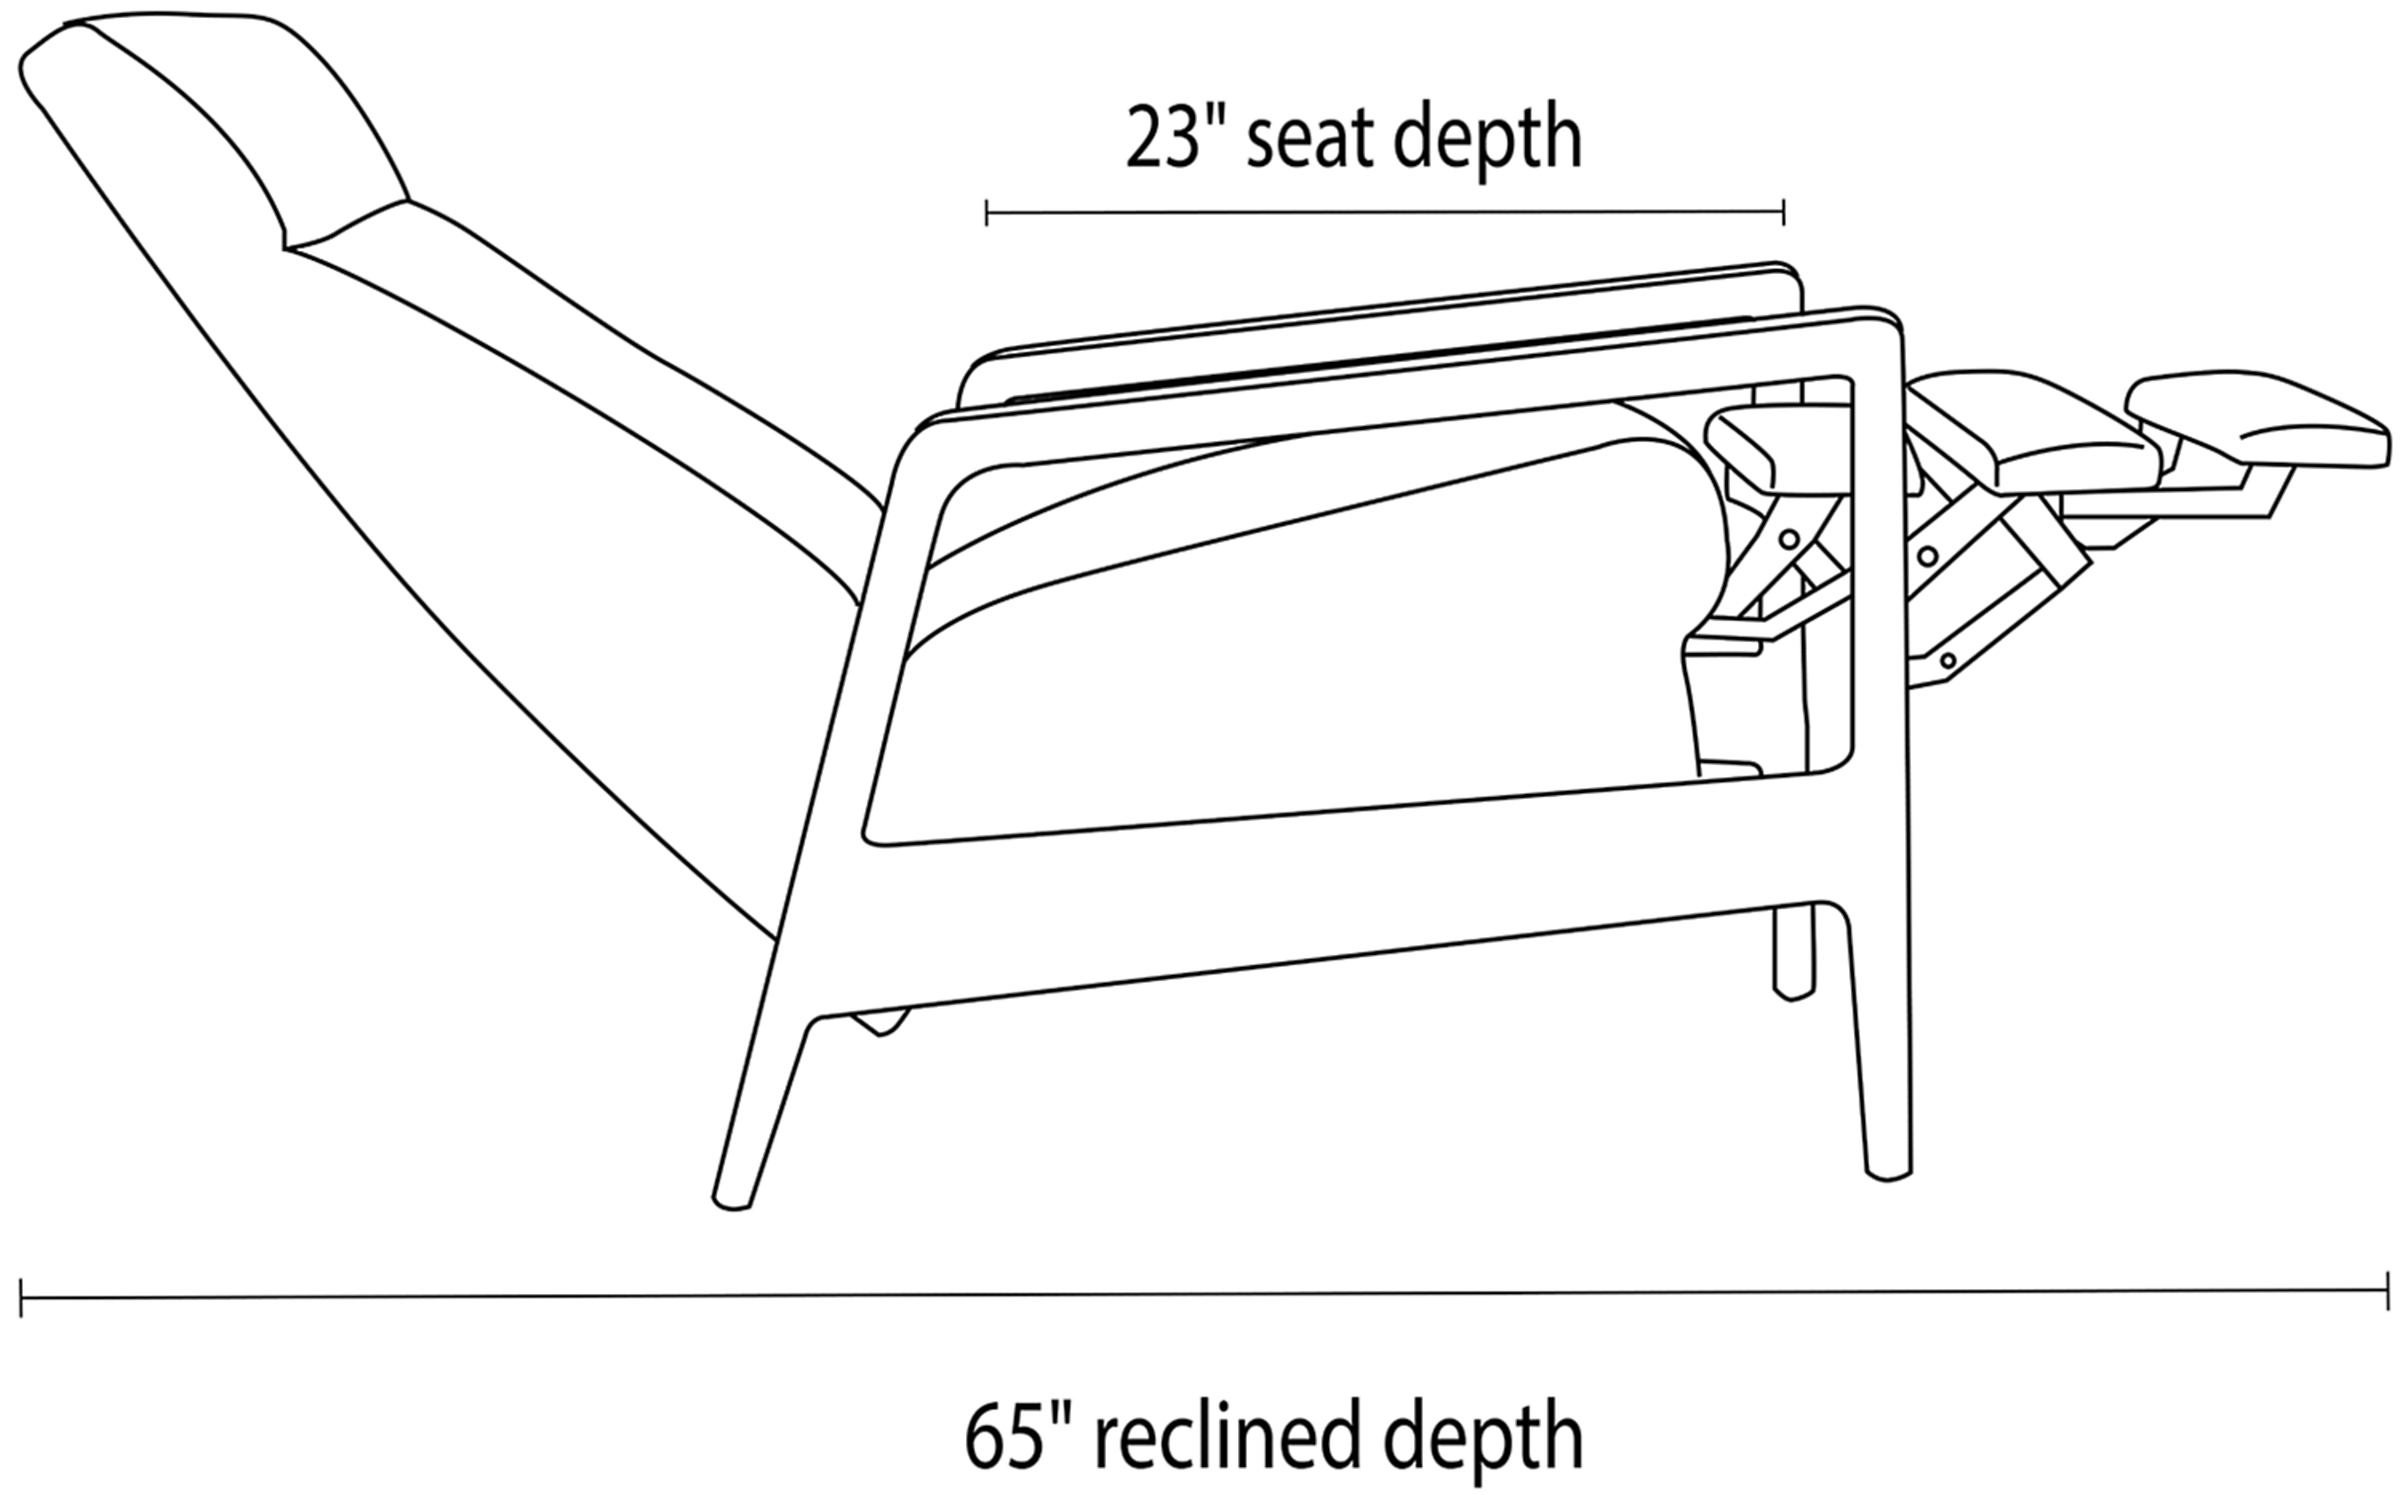 Side view dimension illustration of Westport recliner.